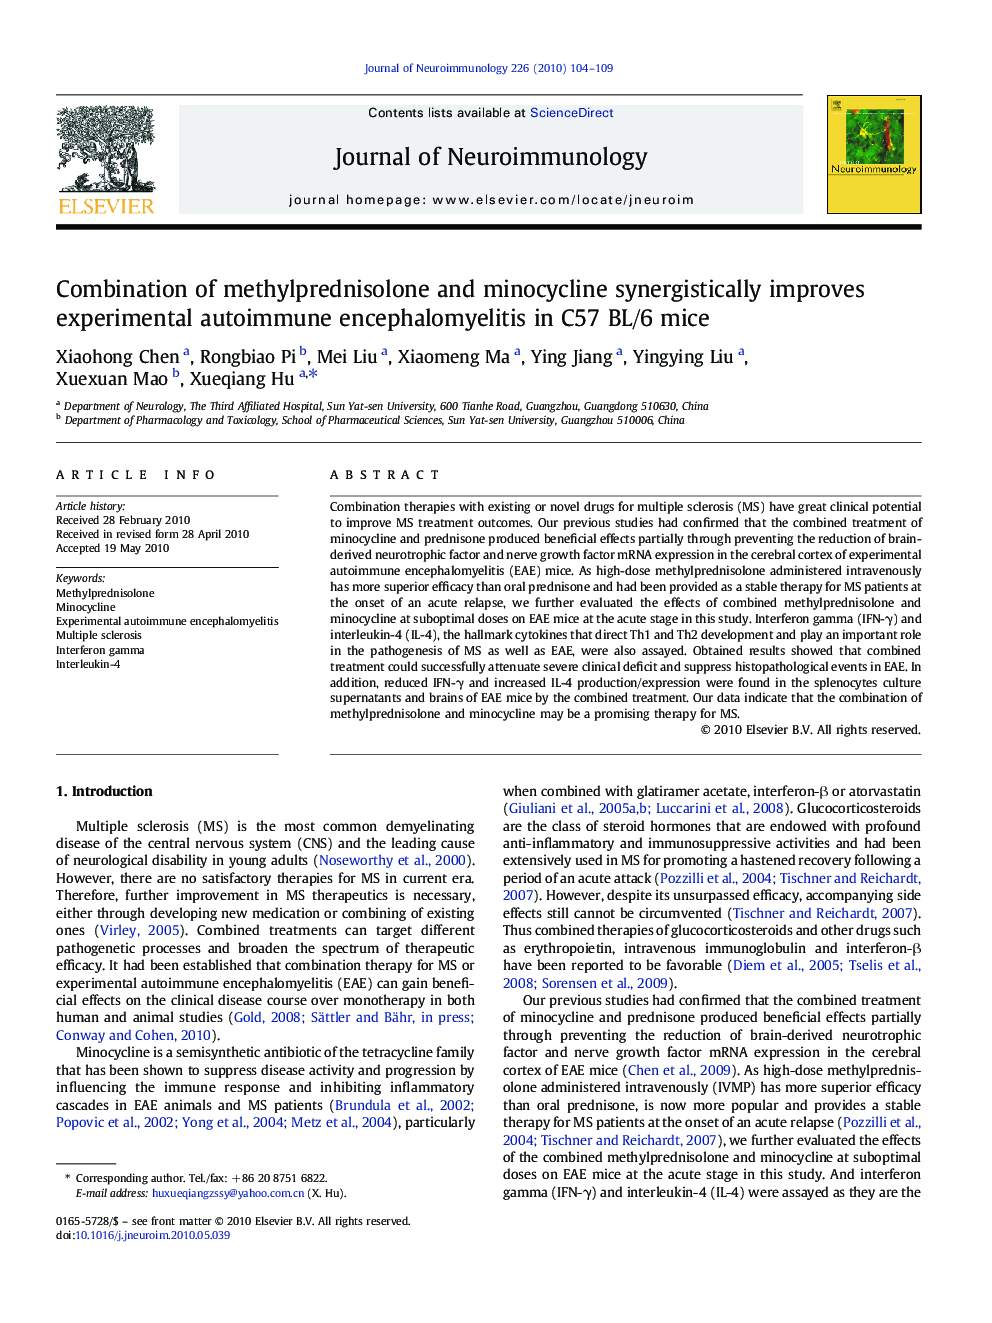 Combination of methylprednisolone and minocycline synergistically improves experimental autoimmune encephalomyelitis in C57 BL/6 mice